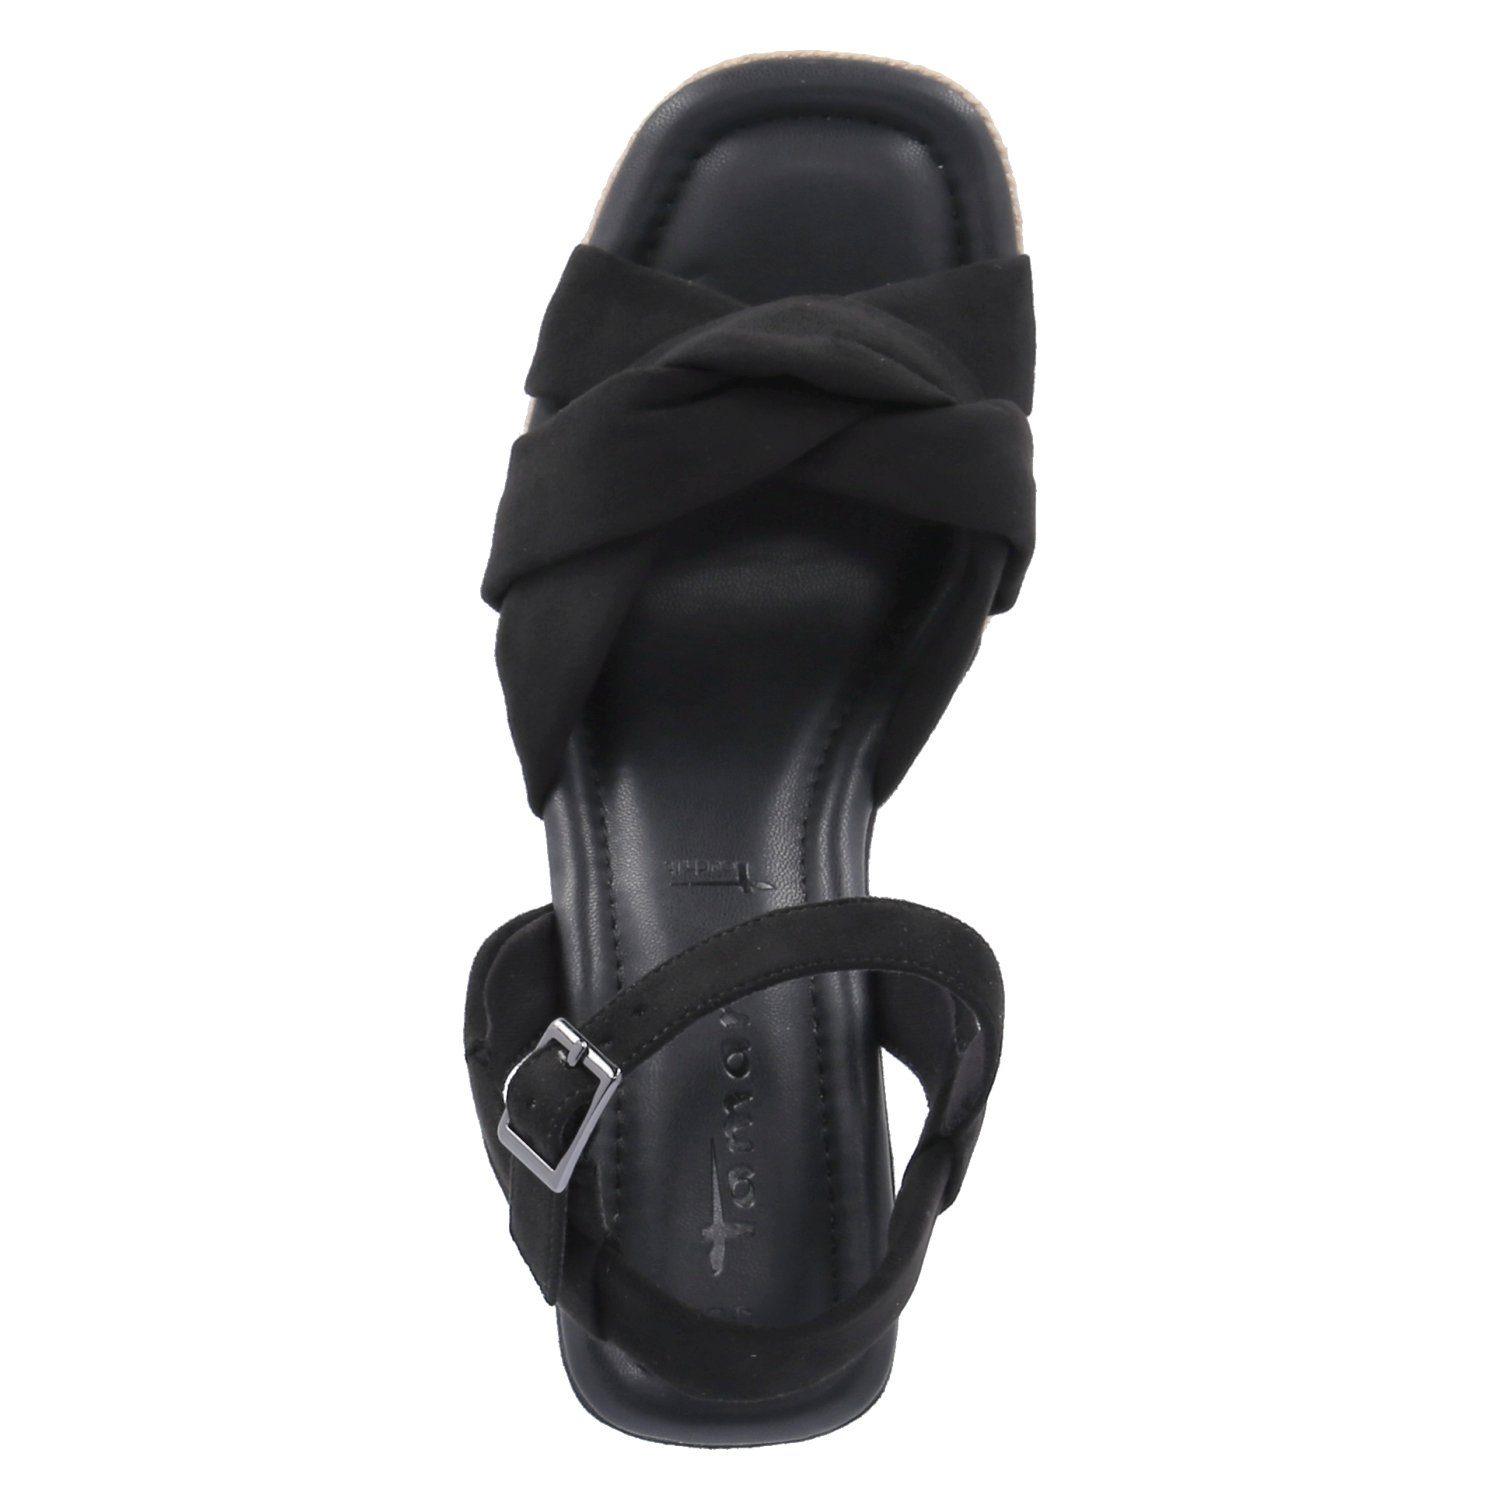 Sandalette schwarz Keilsandaletten Tamaris